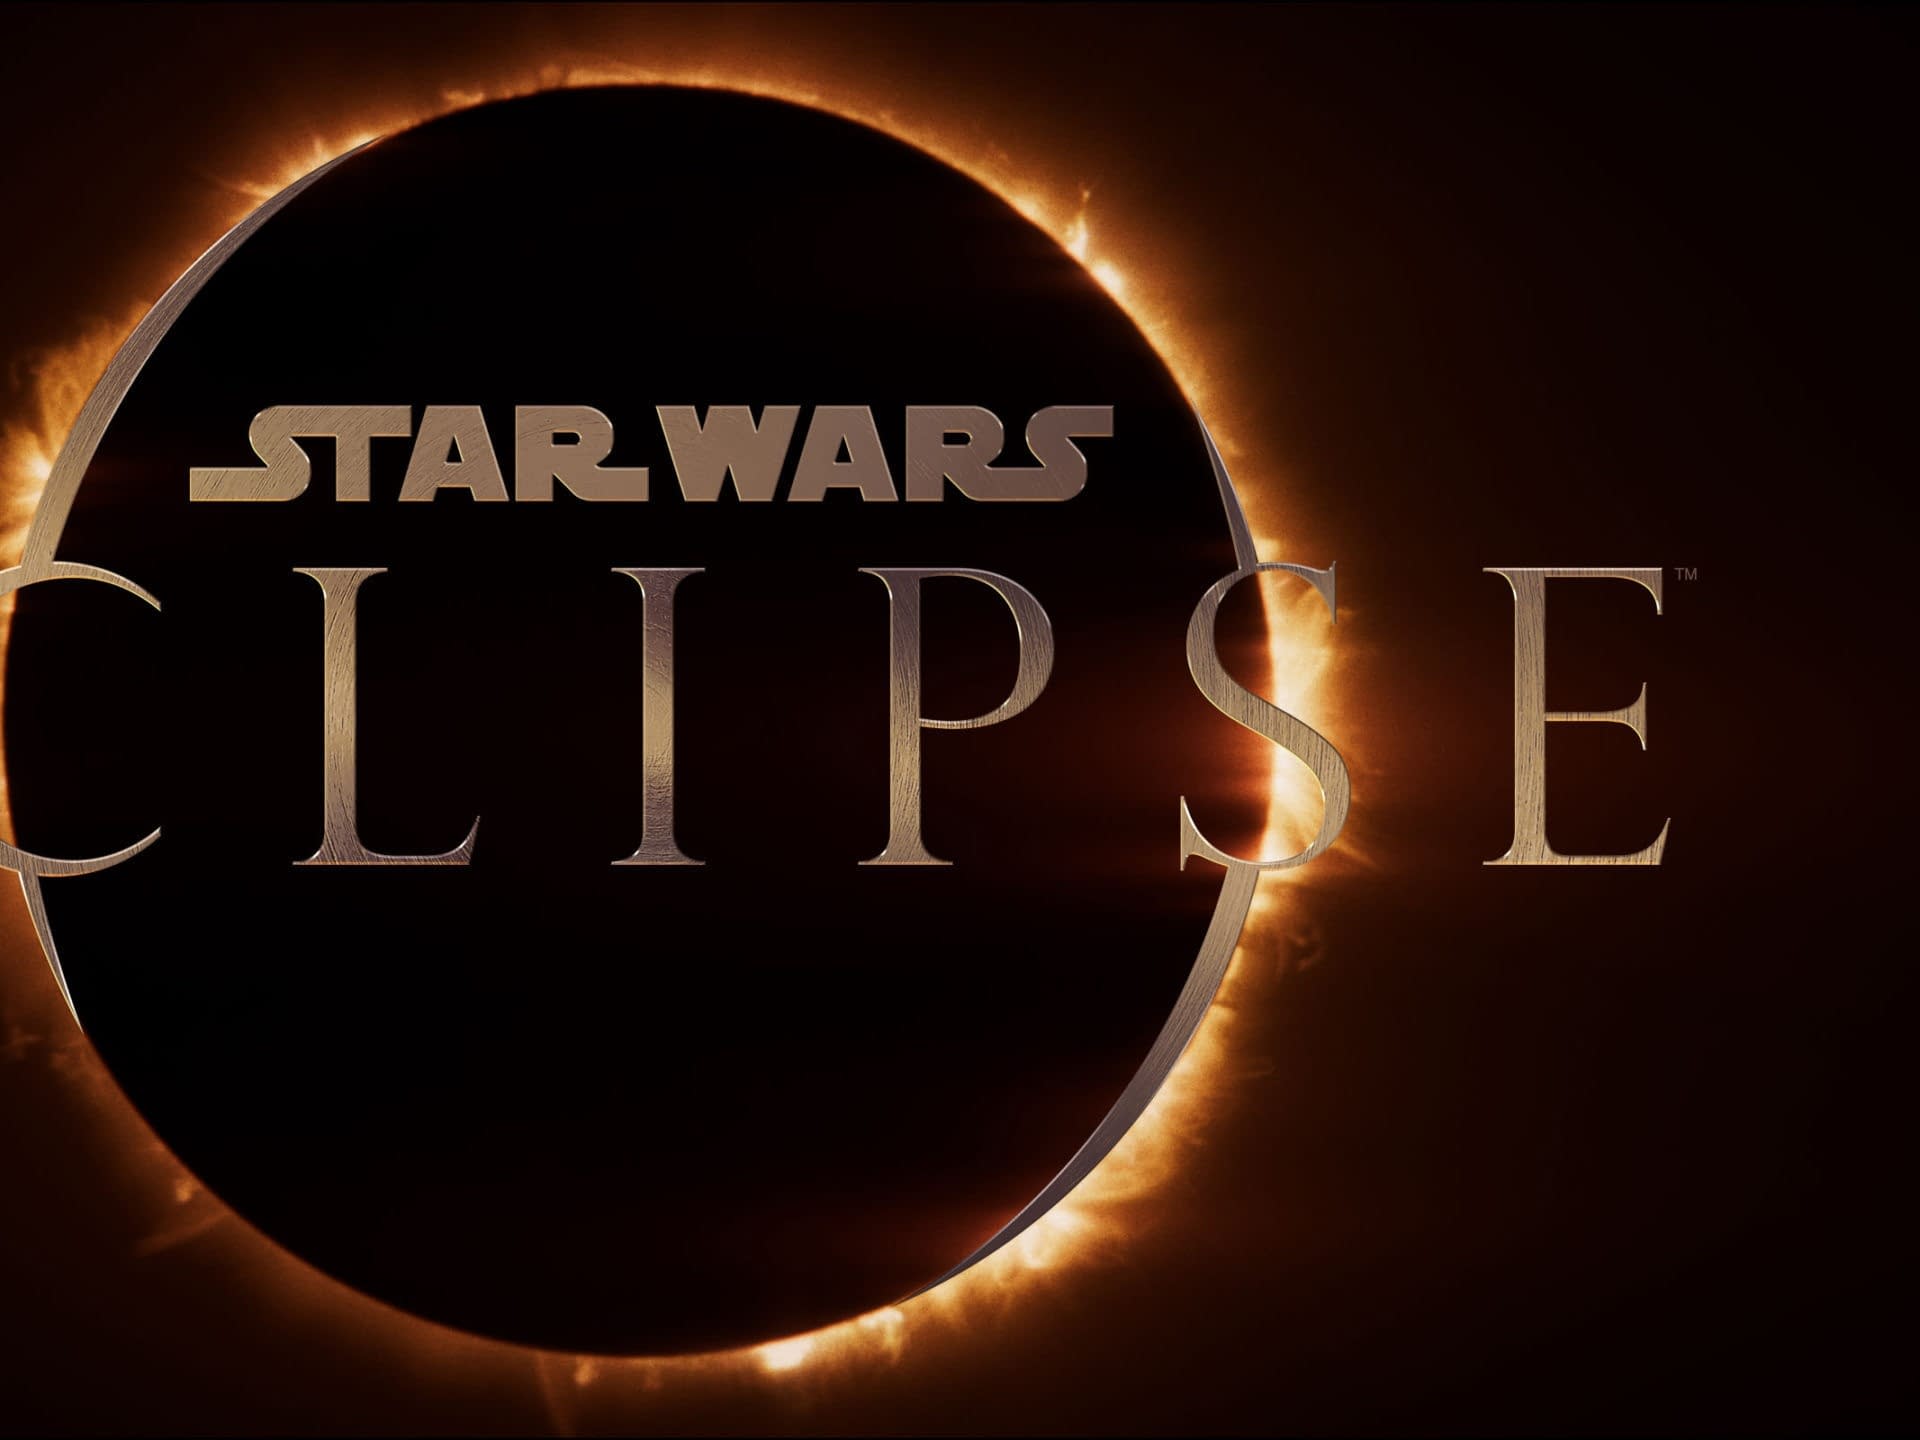 New Description from Quantic Dream: Star Wars Eclipe Development Continues